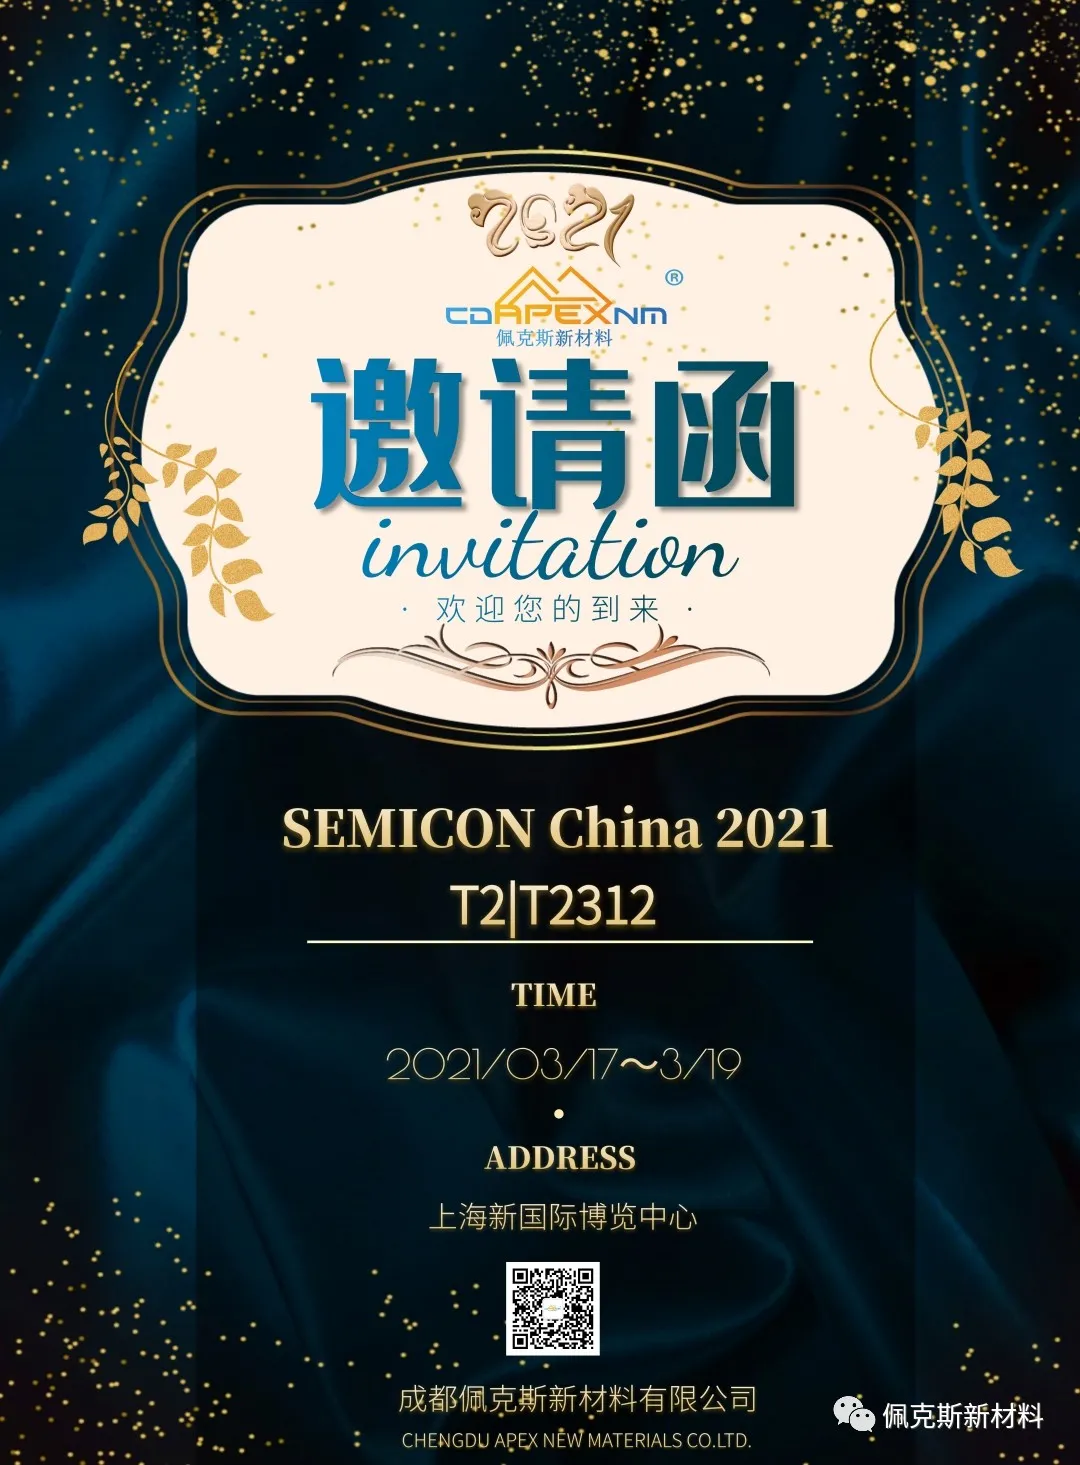 Invitation letter of 2021 Shanghai international semiconduct